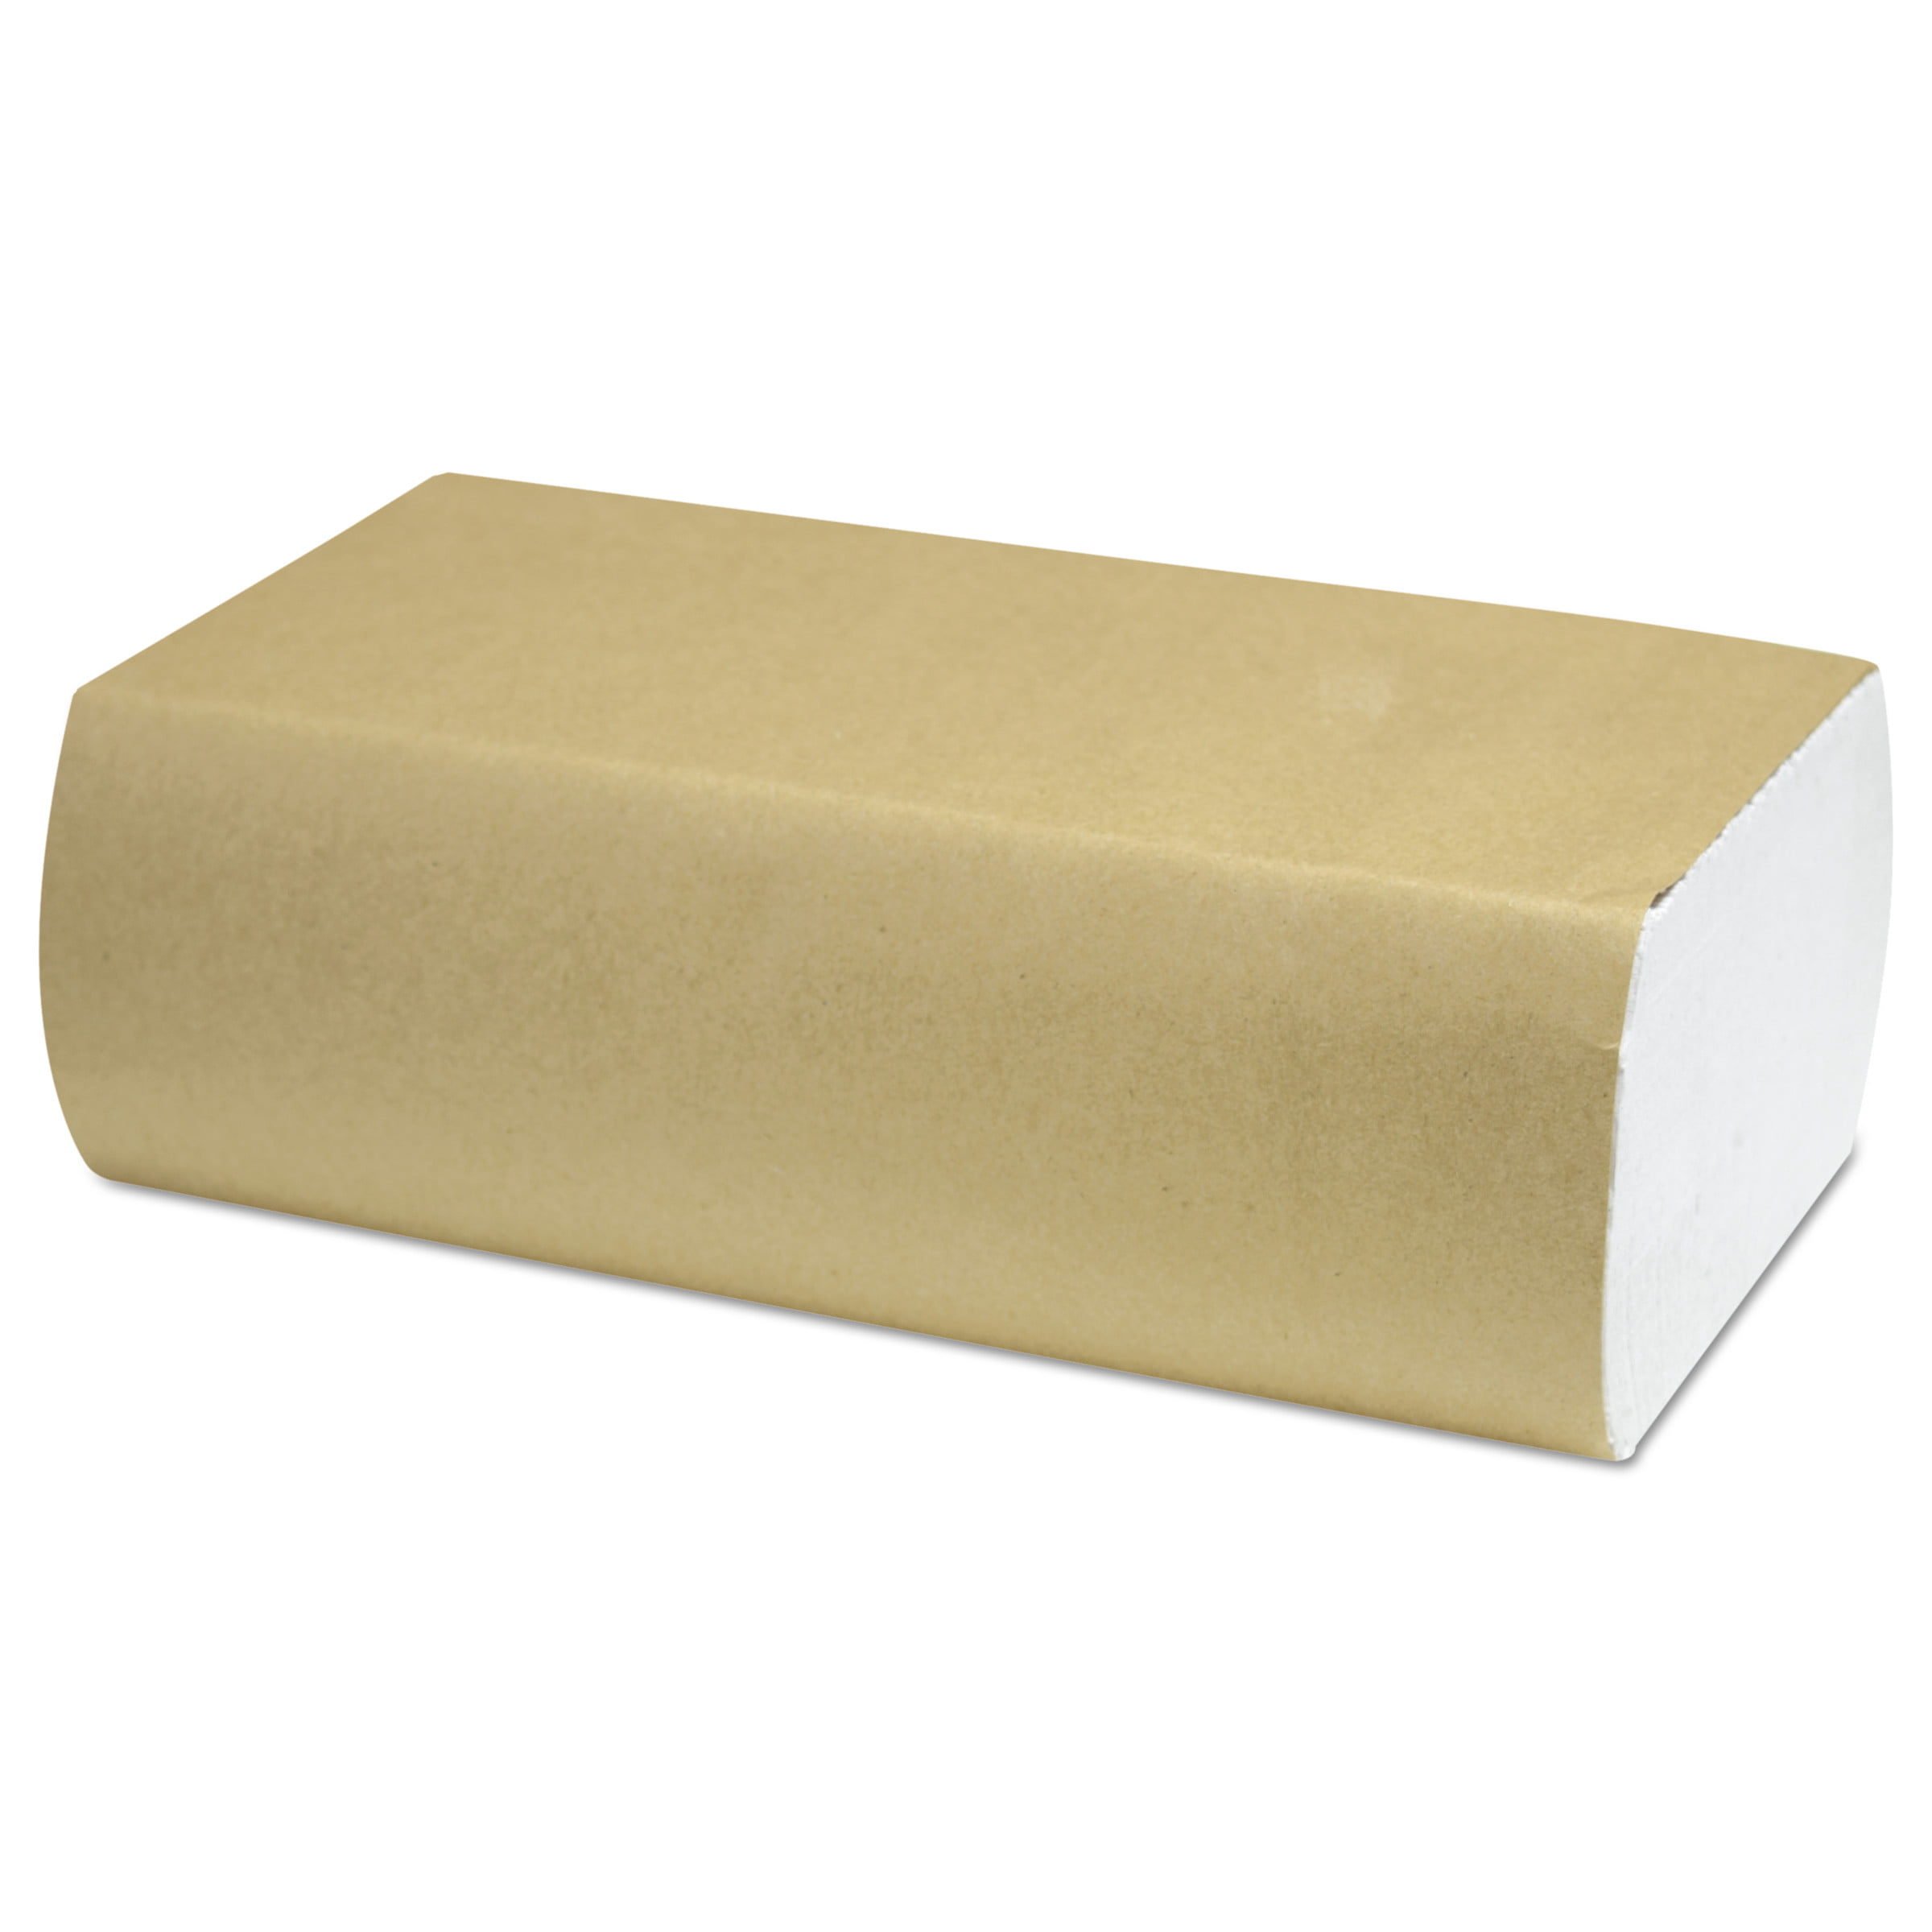 White Multi-Fold Towels 4000 Sheets/Case. PRO Select Cascades H124 